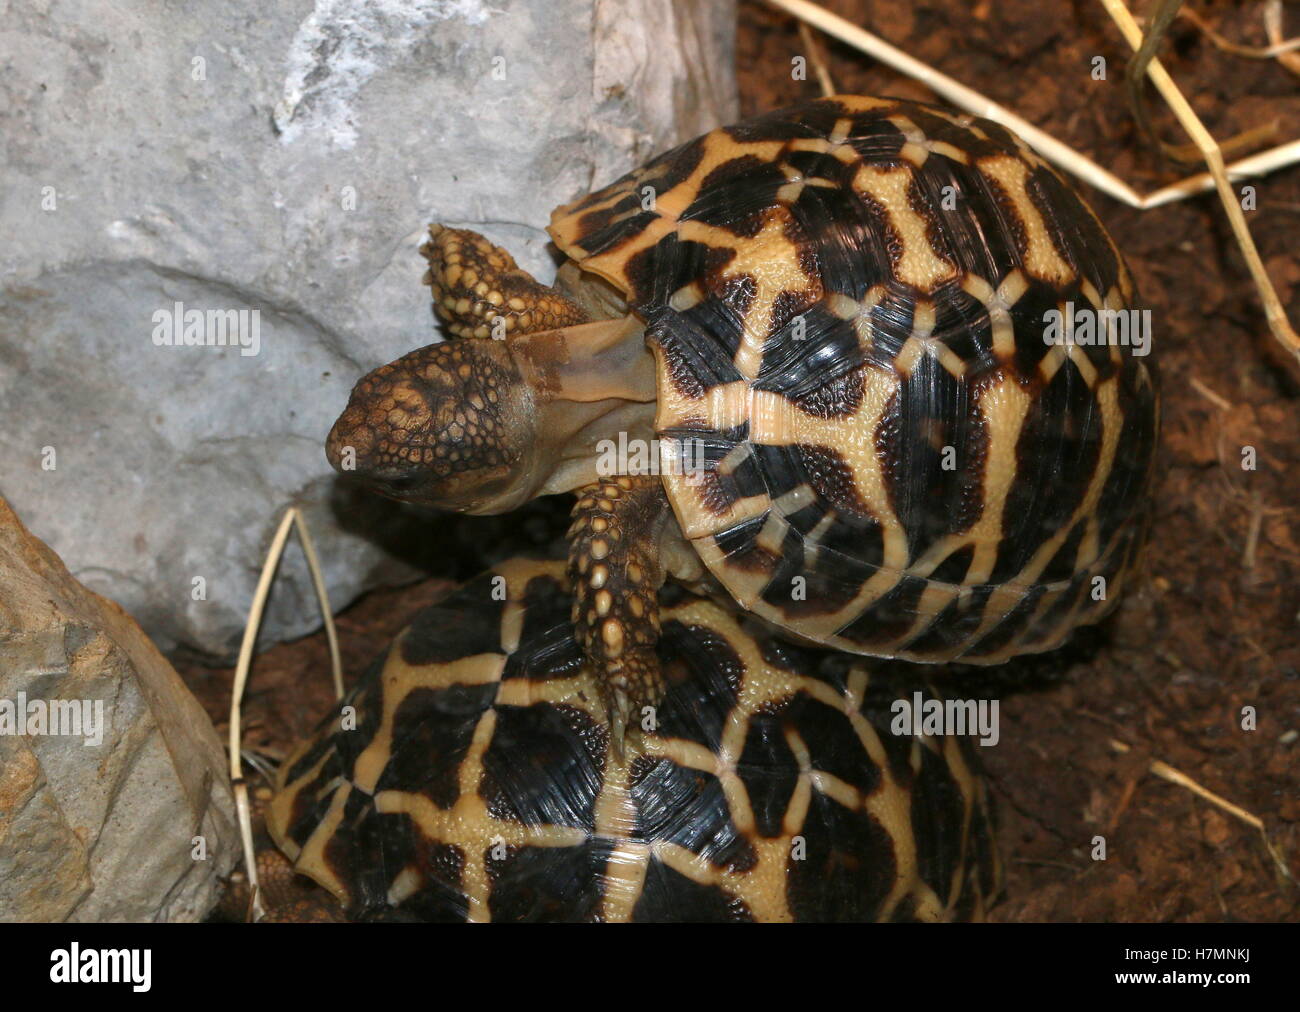 Indian star tortoise (Geochelone Elegans) climbing on top of another tortoise Stock Photo